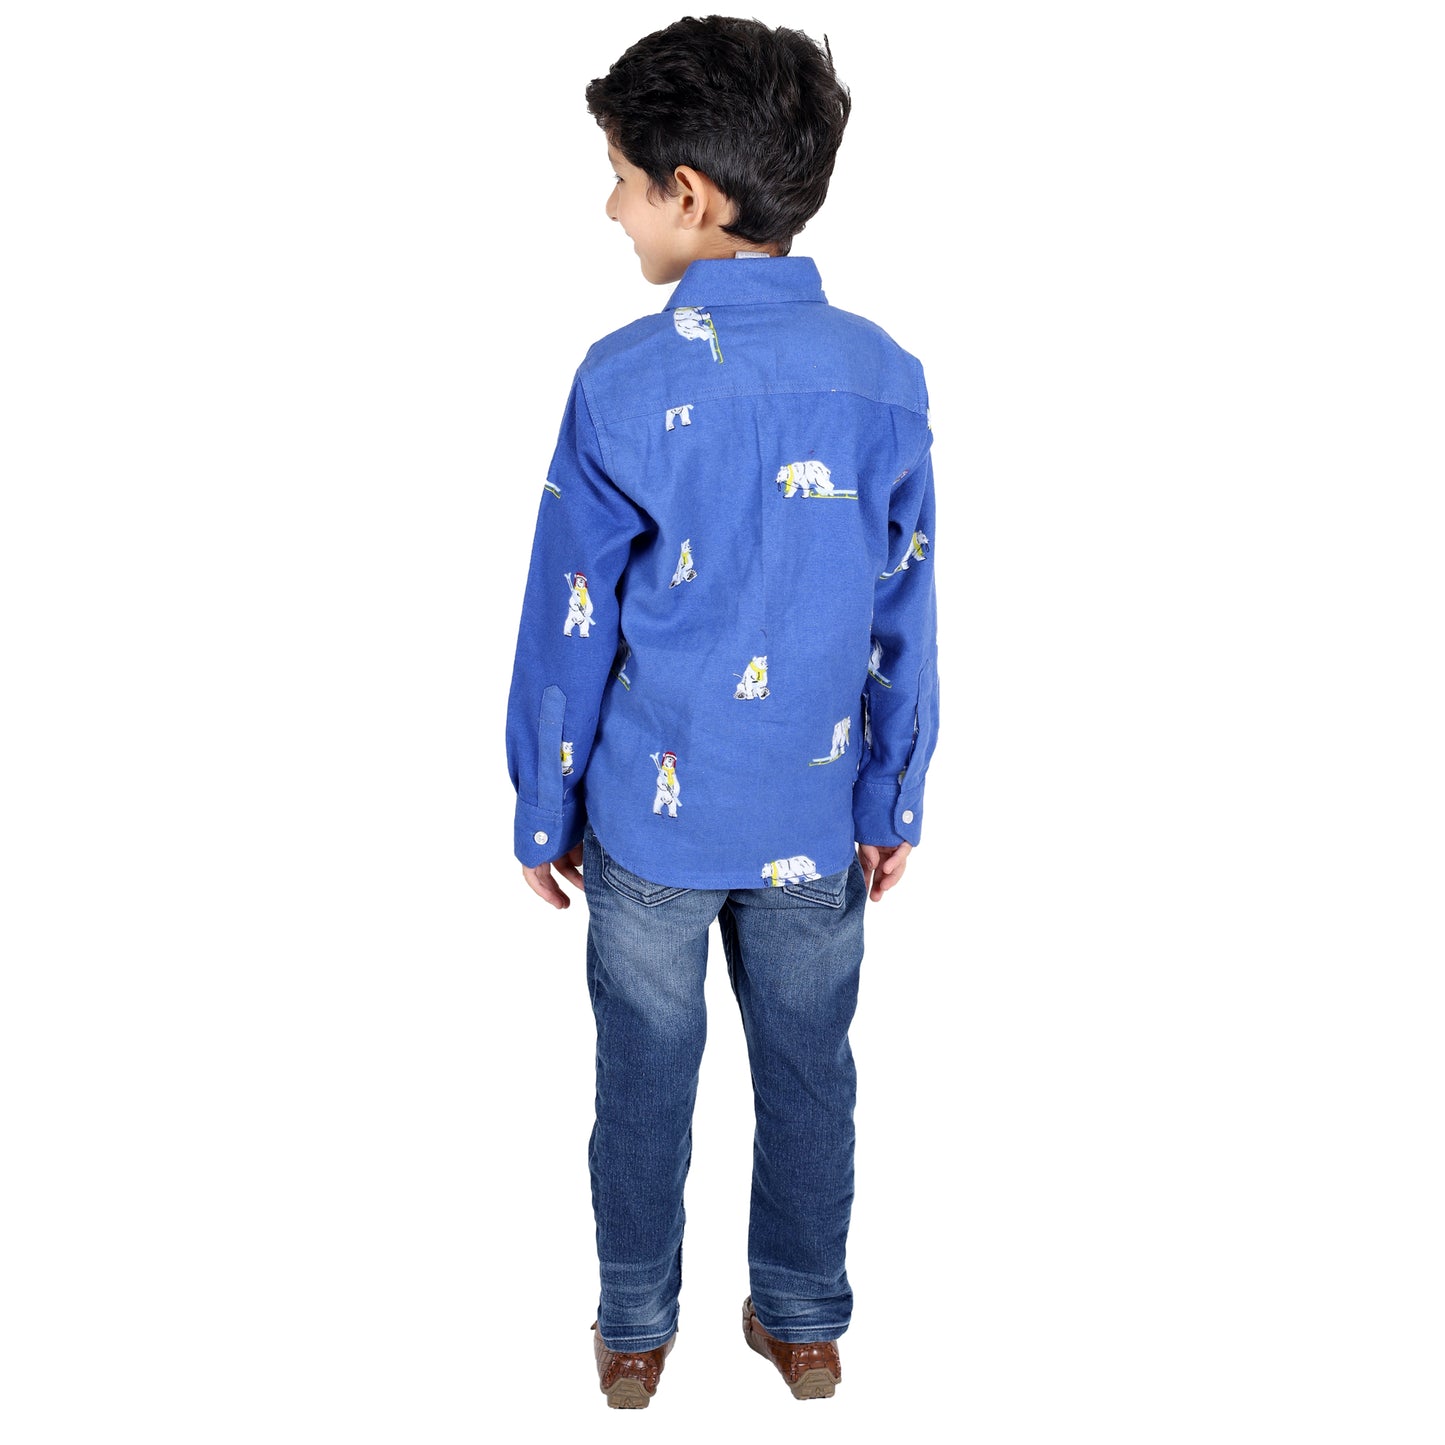 Blue Flannel Shirt with Snow Bear Print